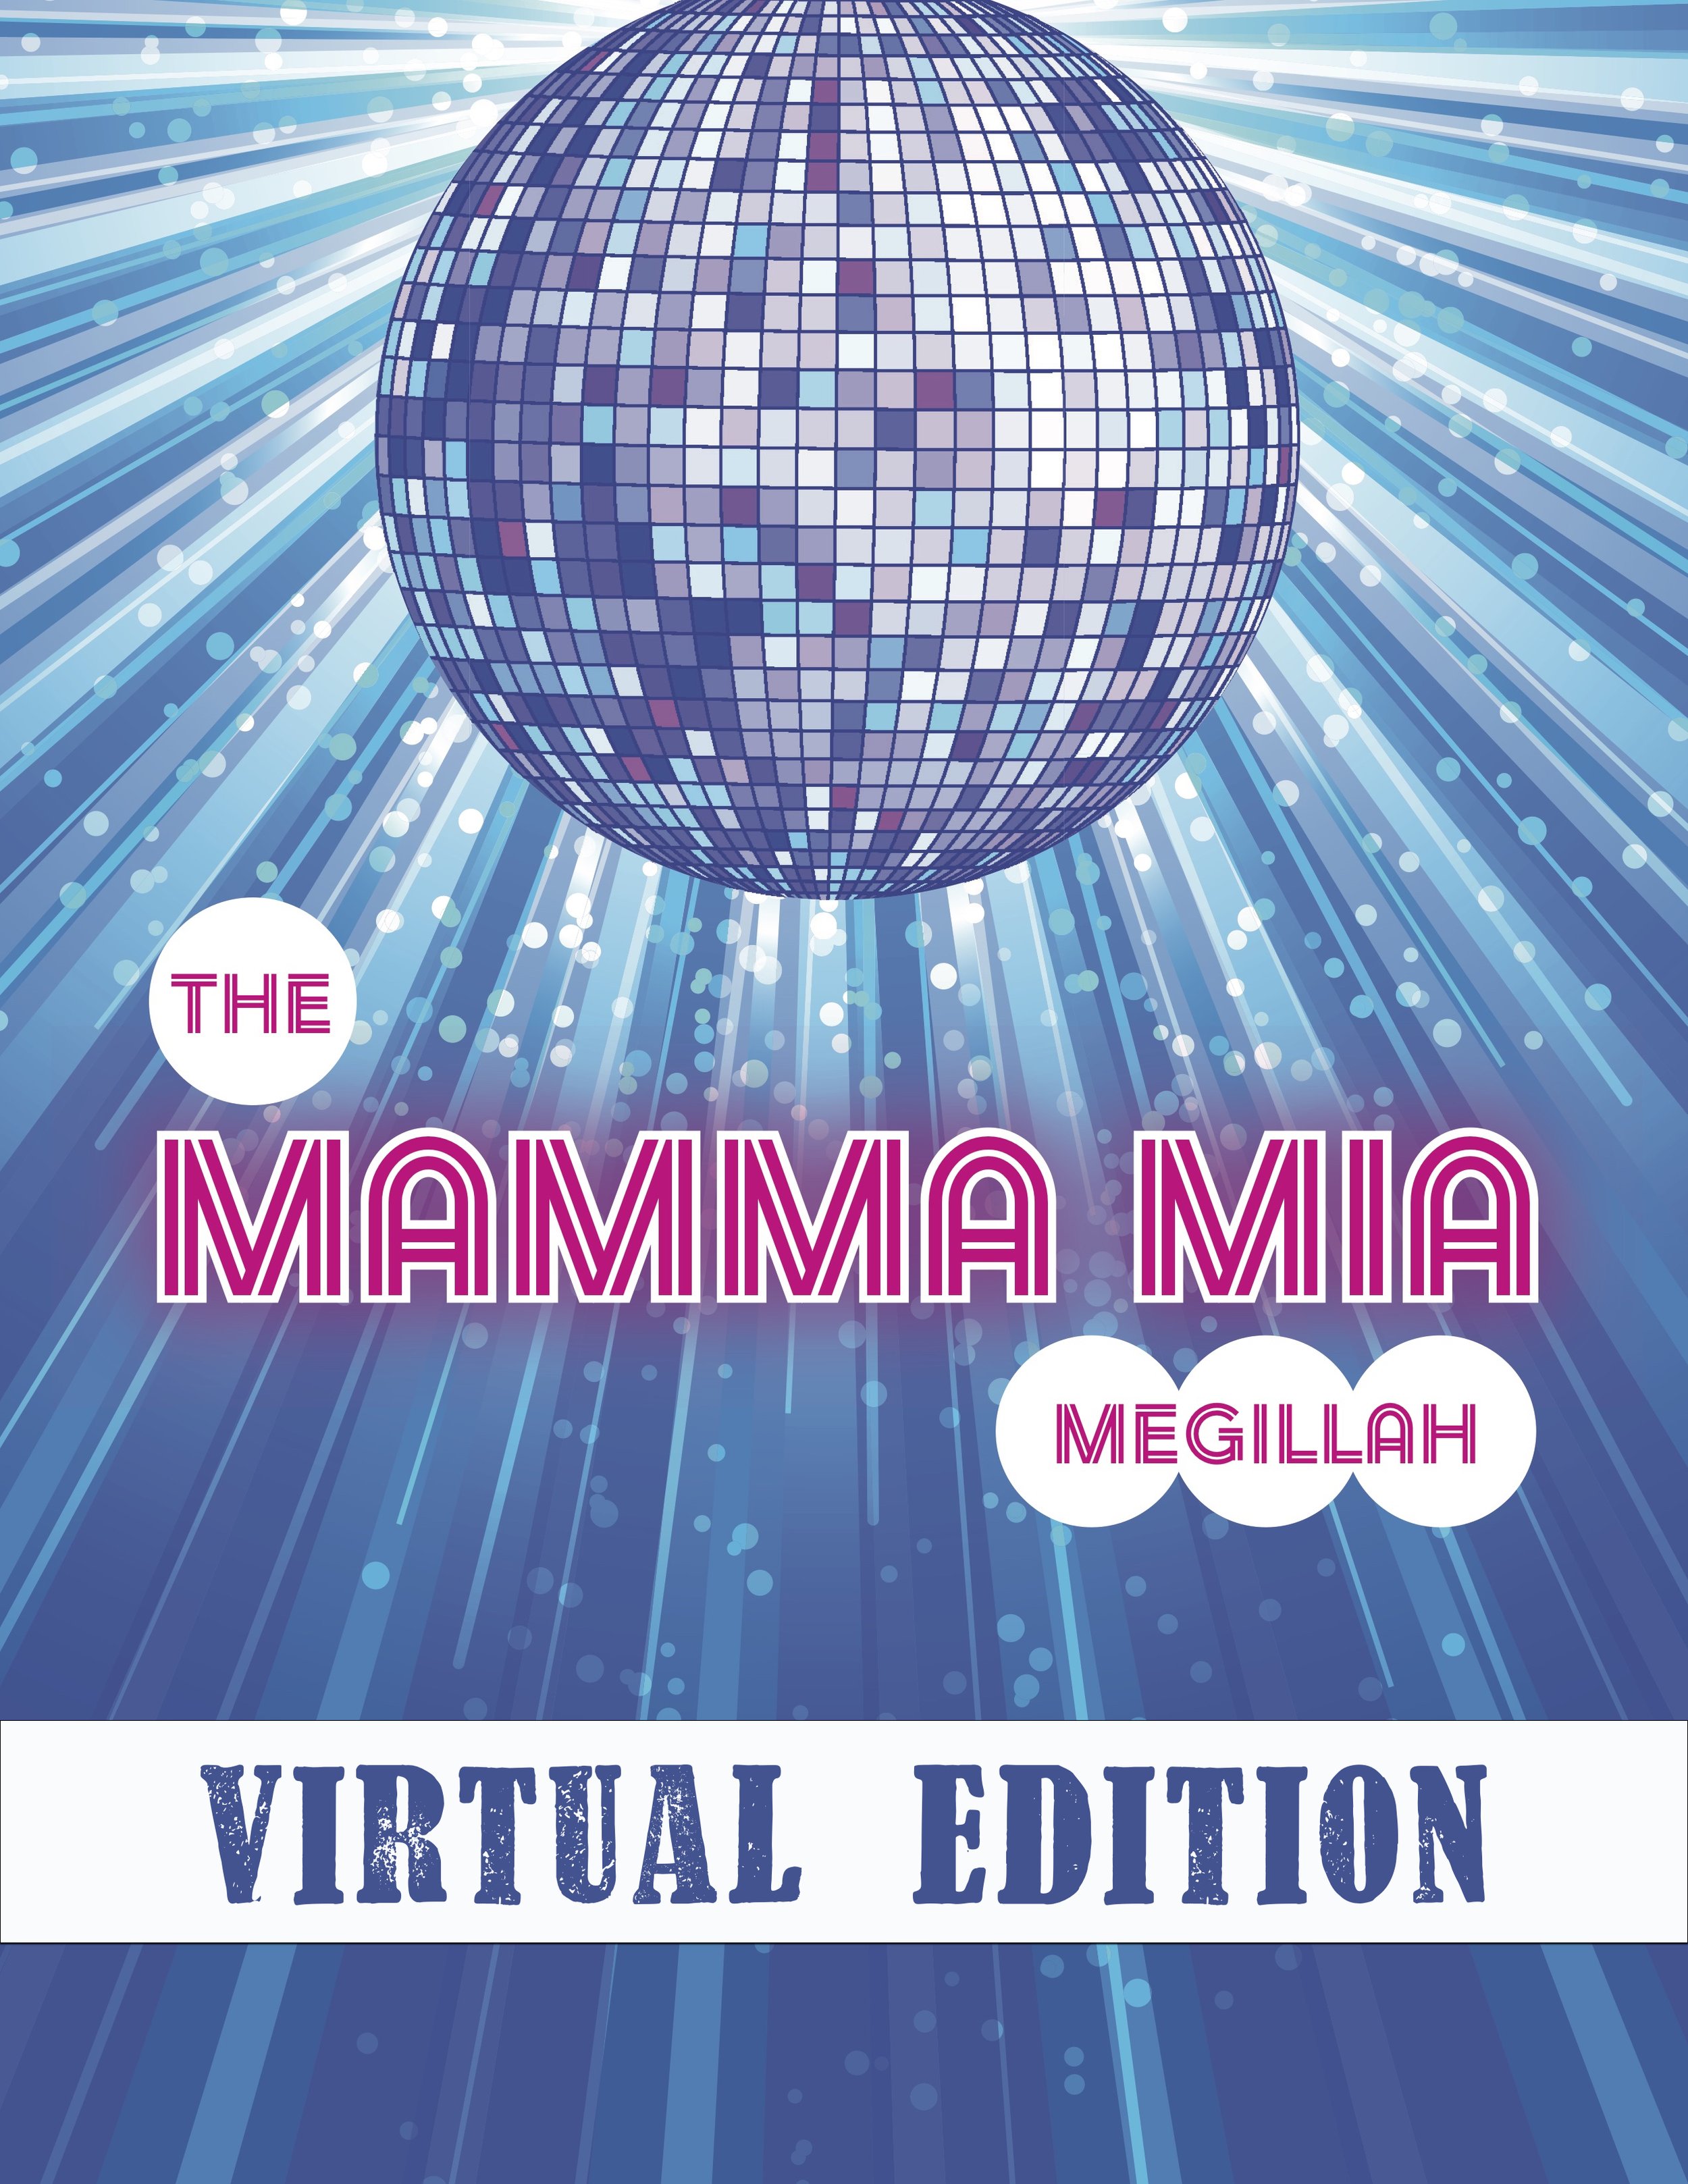 Mamma Mia Megillah - Virtual Edition Poster.jpg